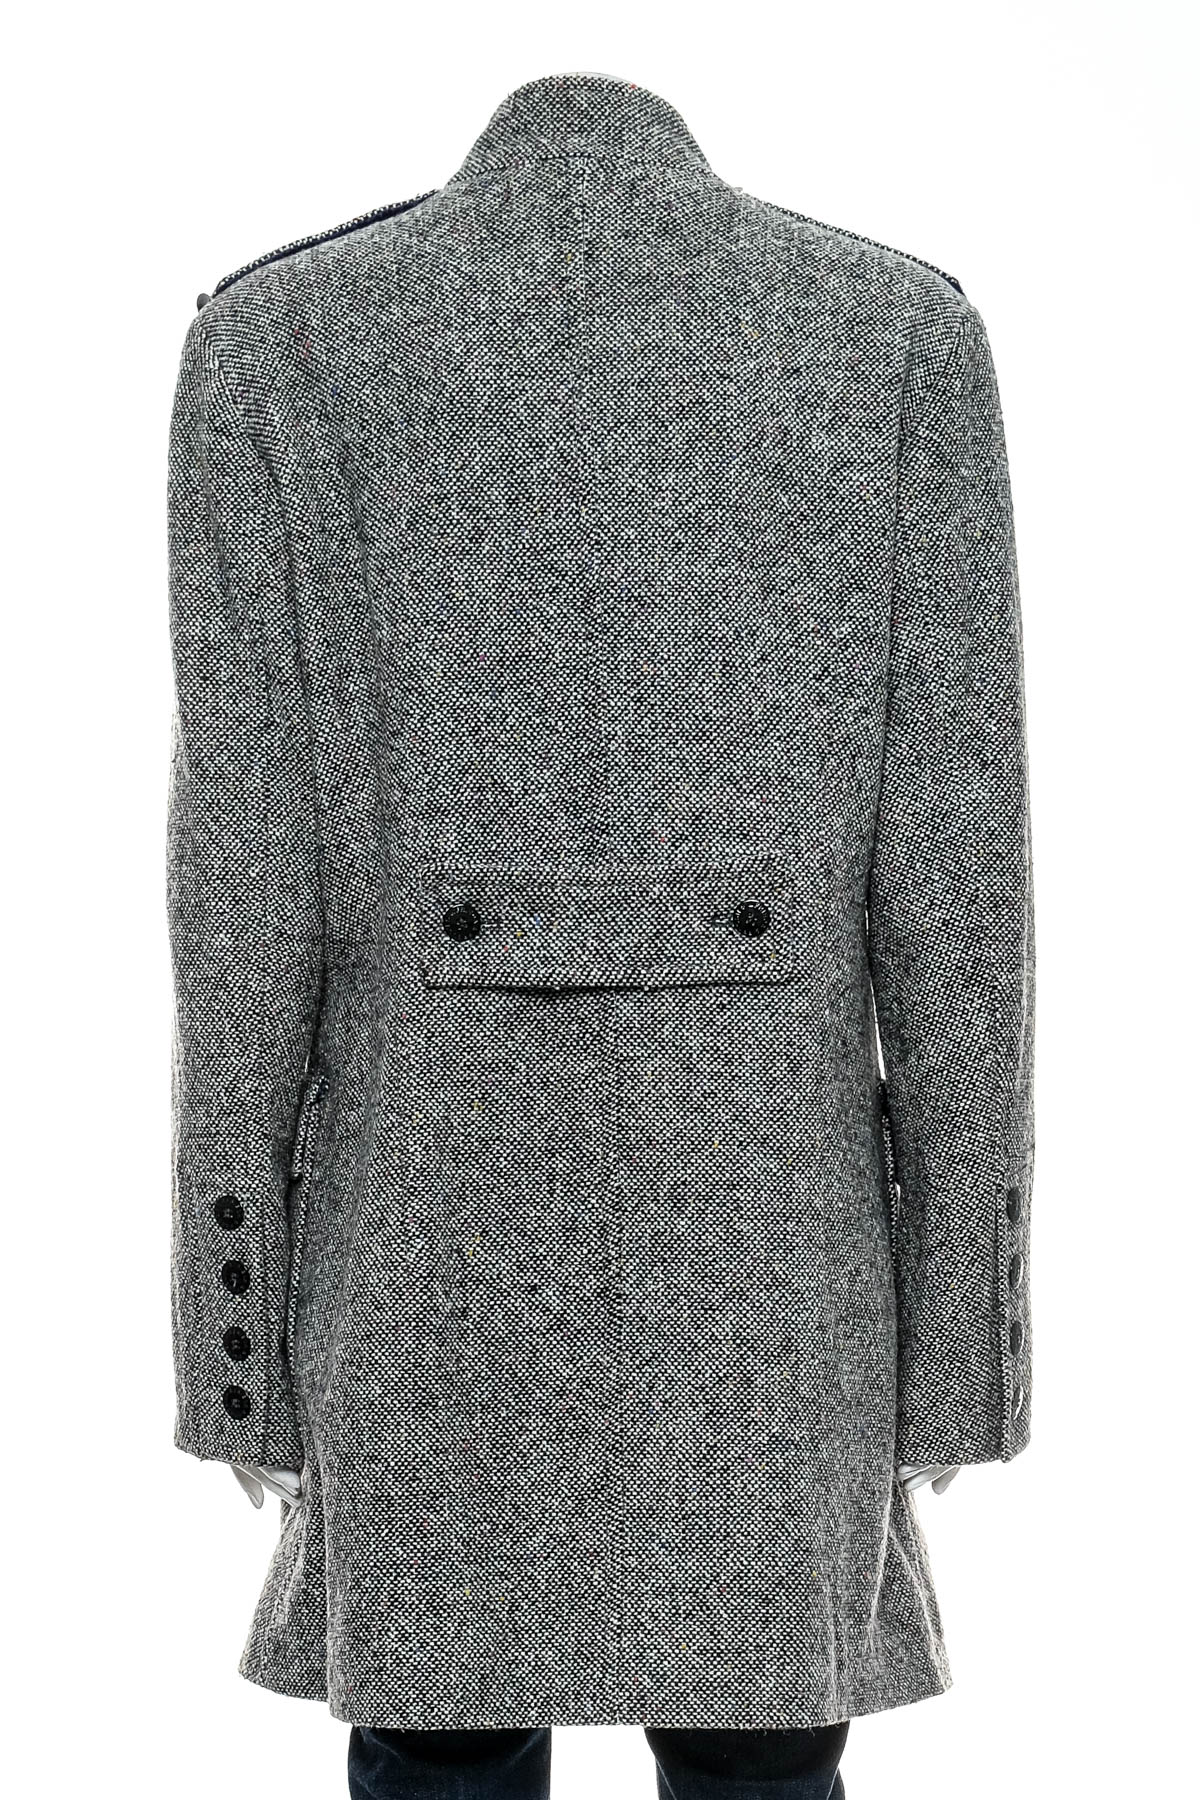 Women's coat - Frieda & Freddies - 1